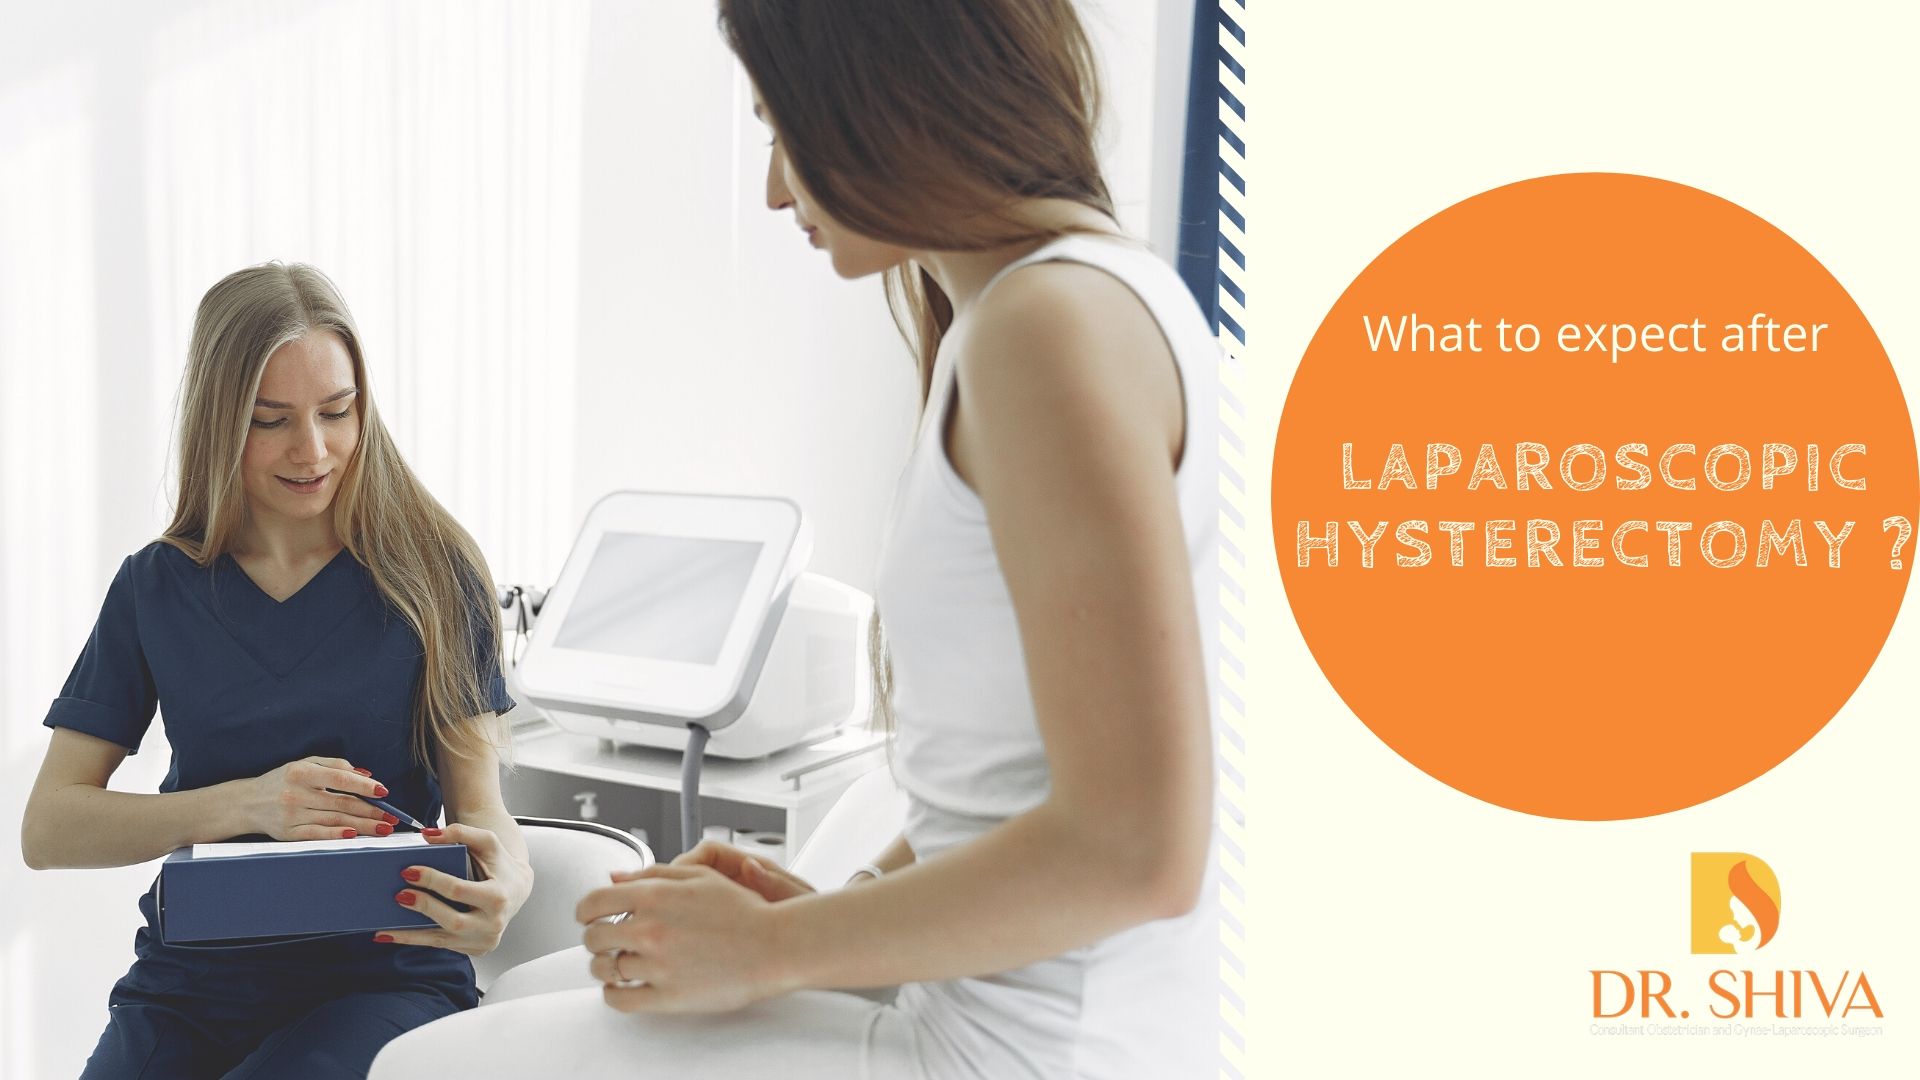 Laparoscopic Hysterectomy – What to expect?